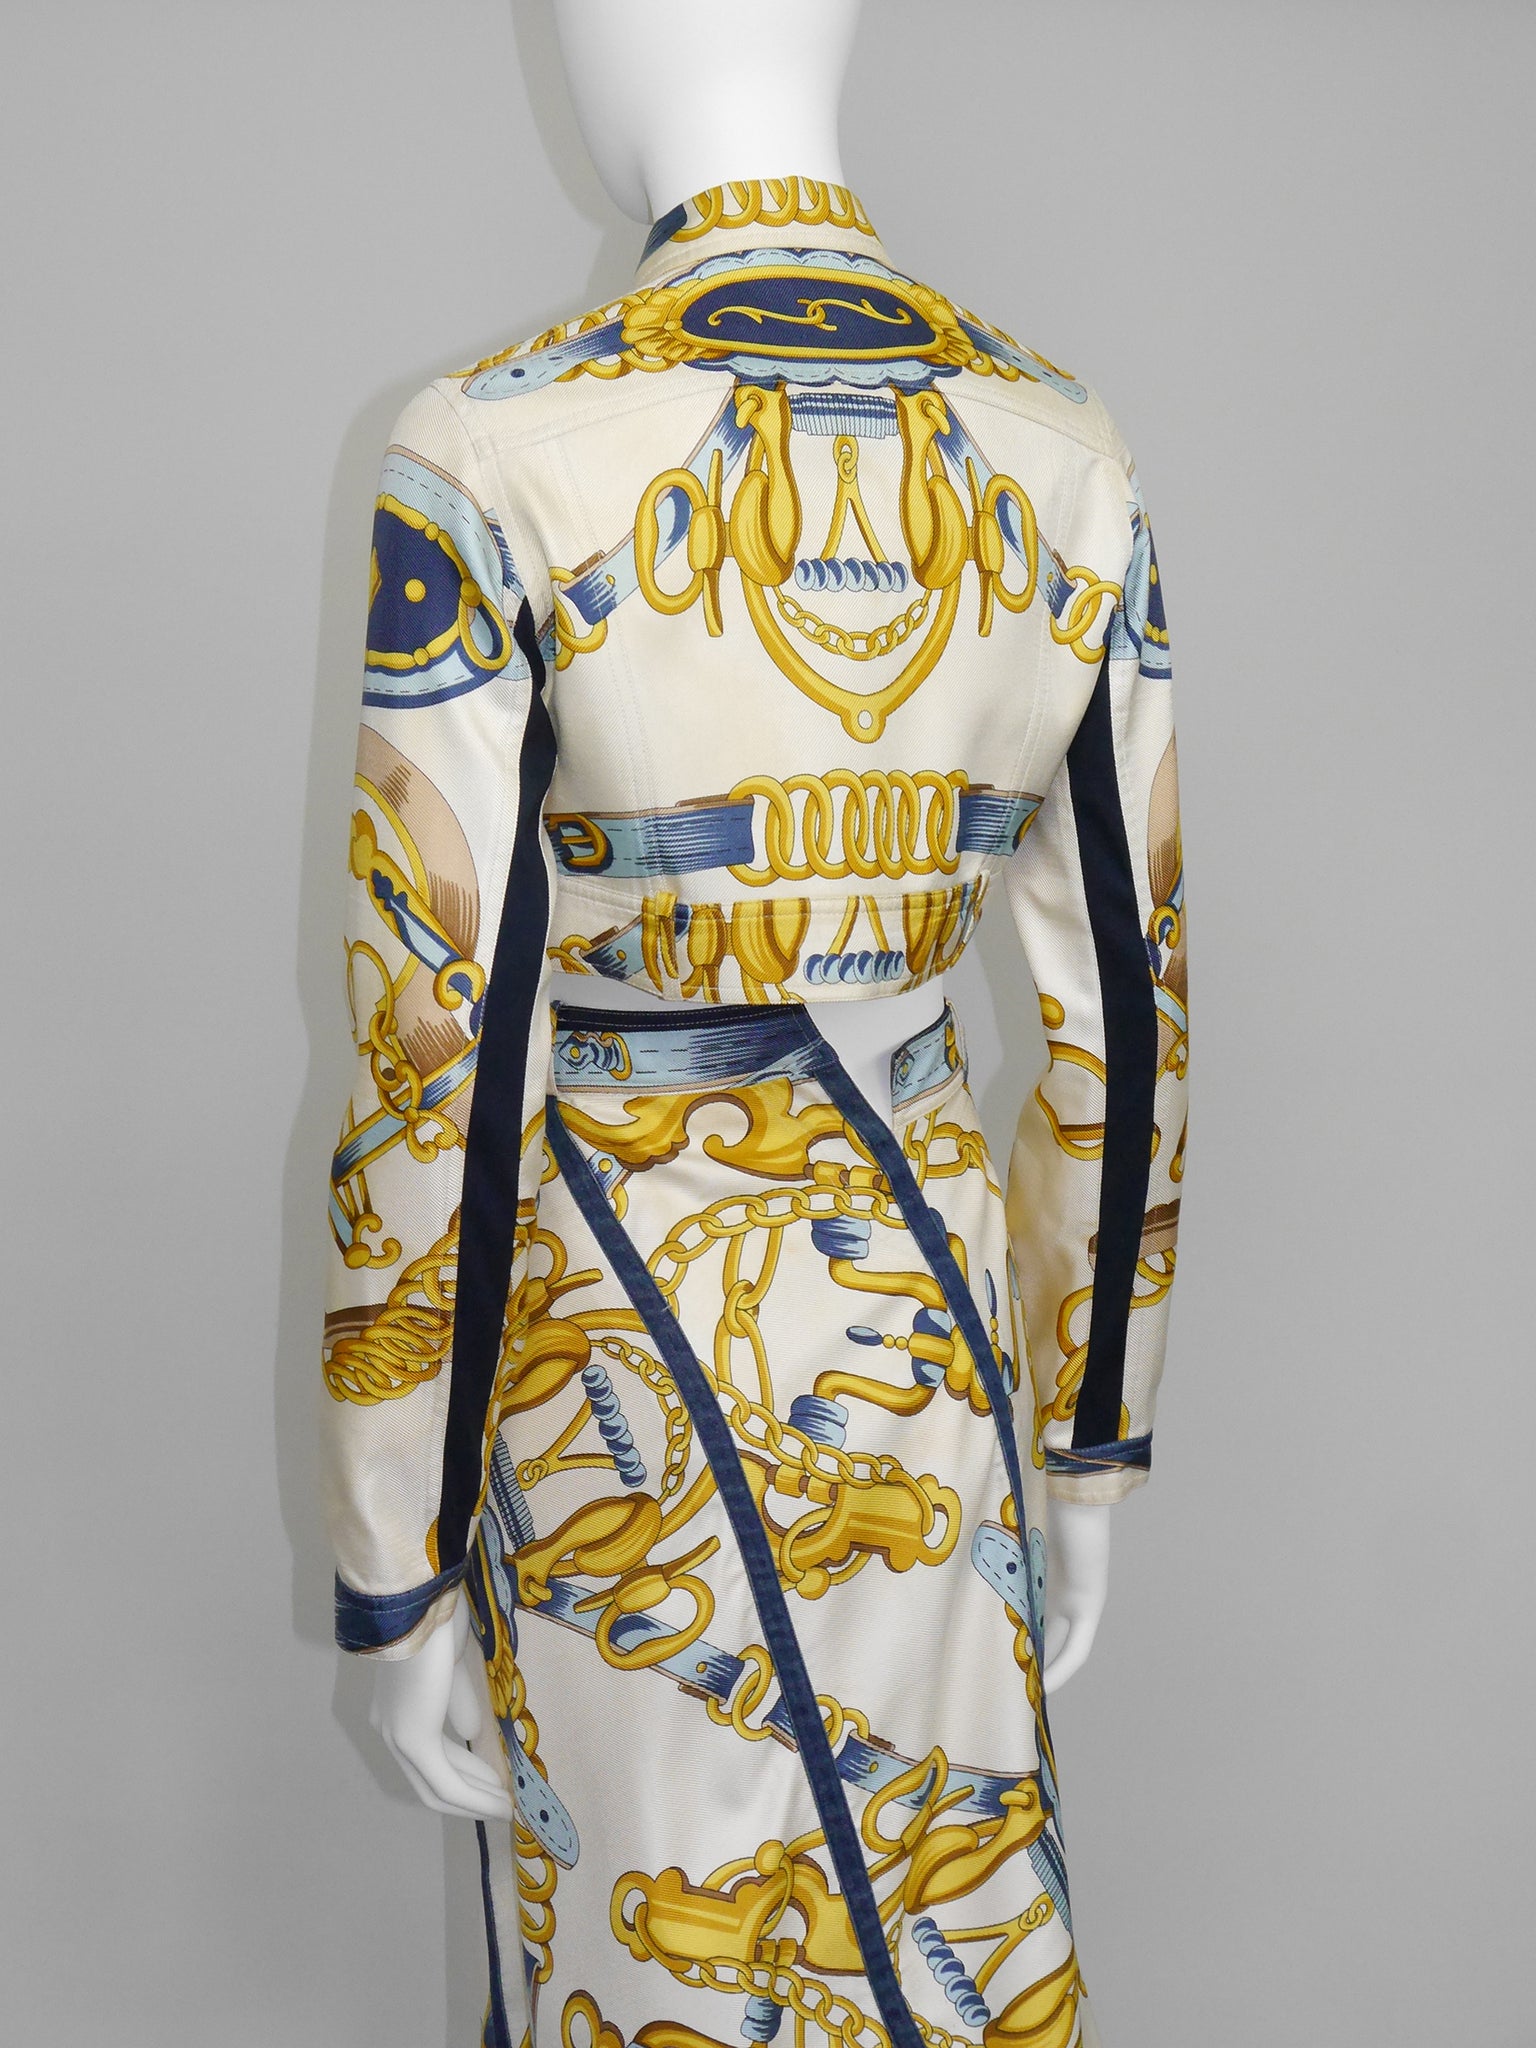 CHRISTIAN DIOR by John Galliano Spring 2000 Vintage Silk Jacket & Skirt Suit